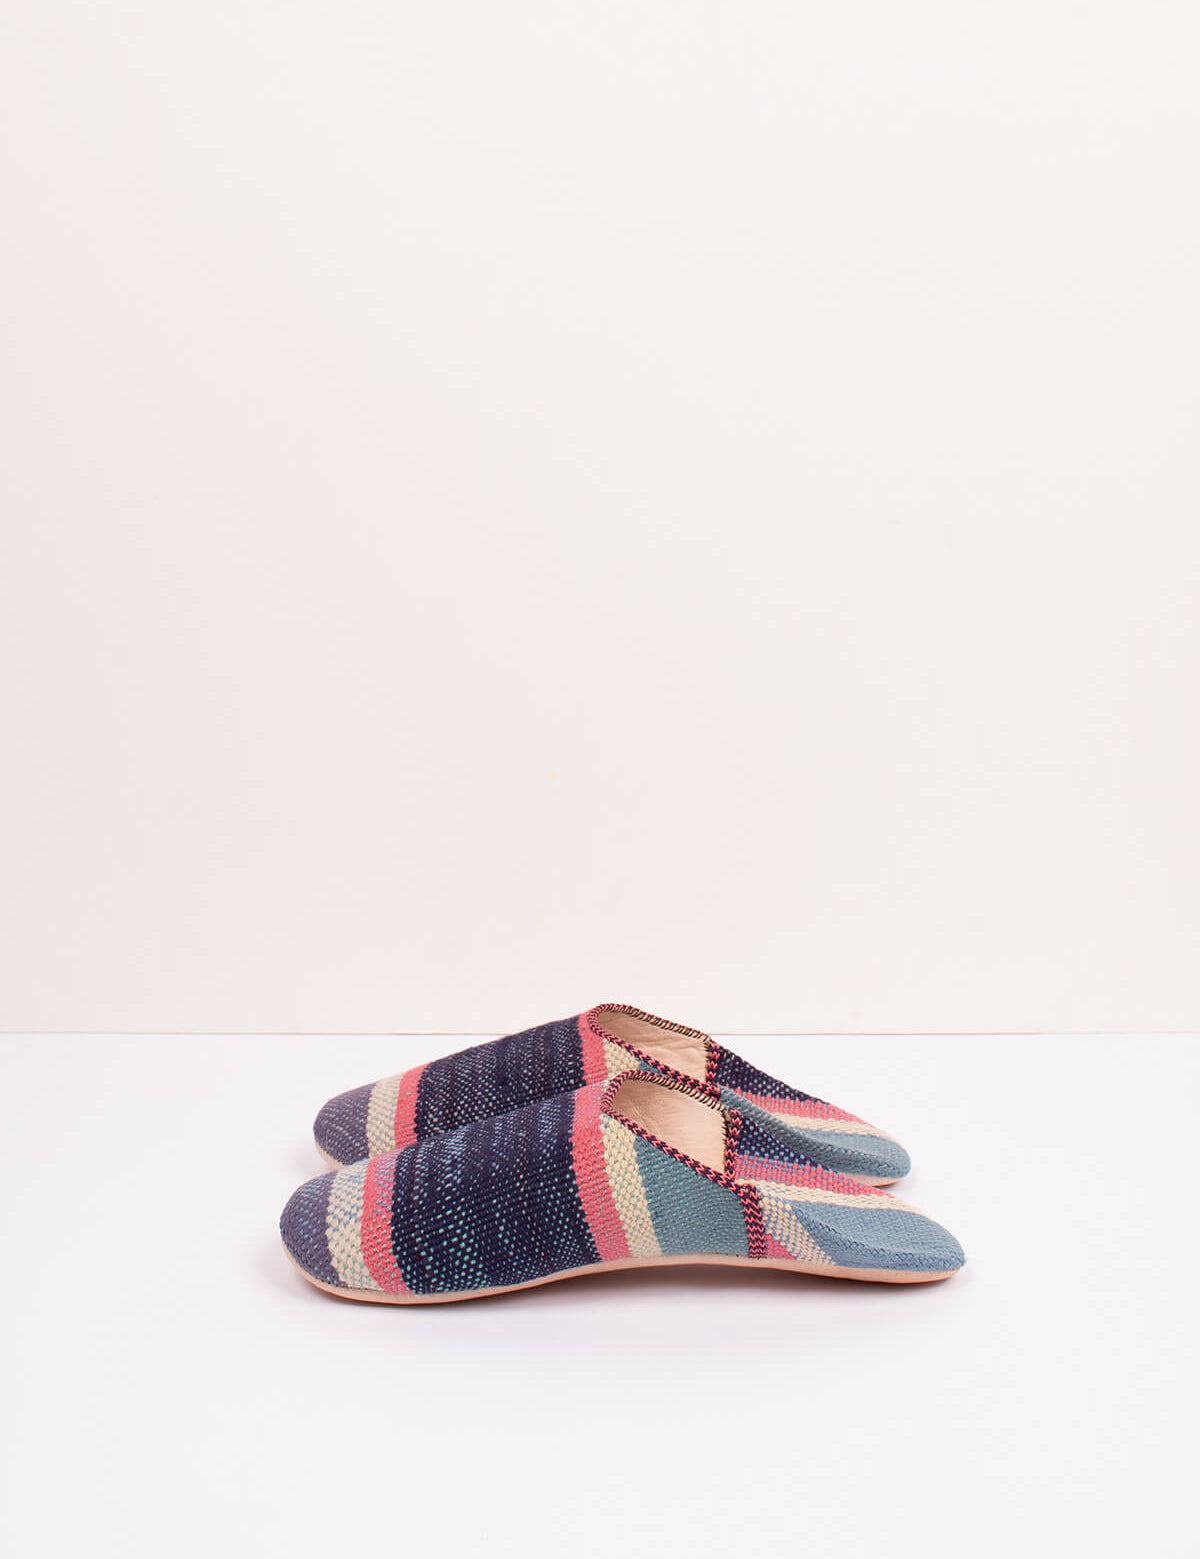 Bohemia-design-boujad-textile-babouche-slippers-nordic-stripe_3d2494fb-0ed8-4b88-b760-cd3bc181f419.jpg